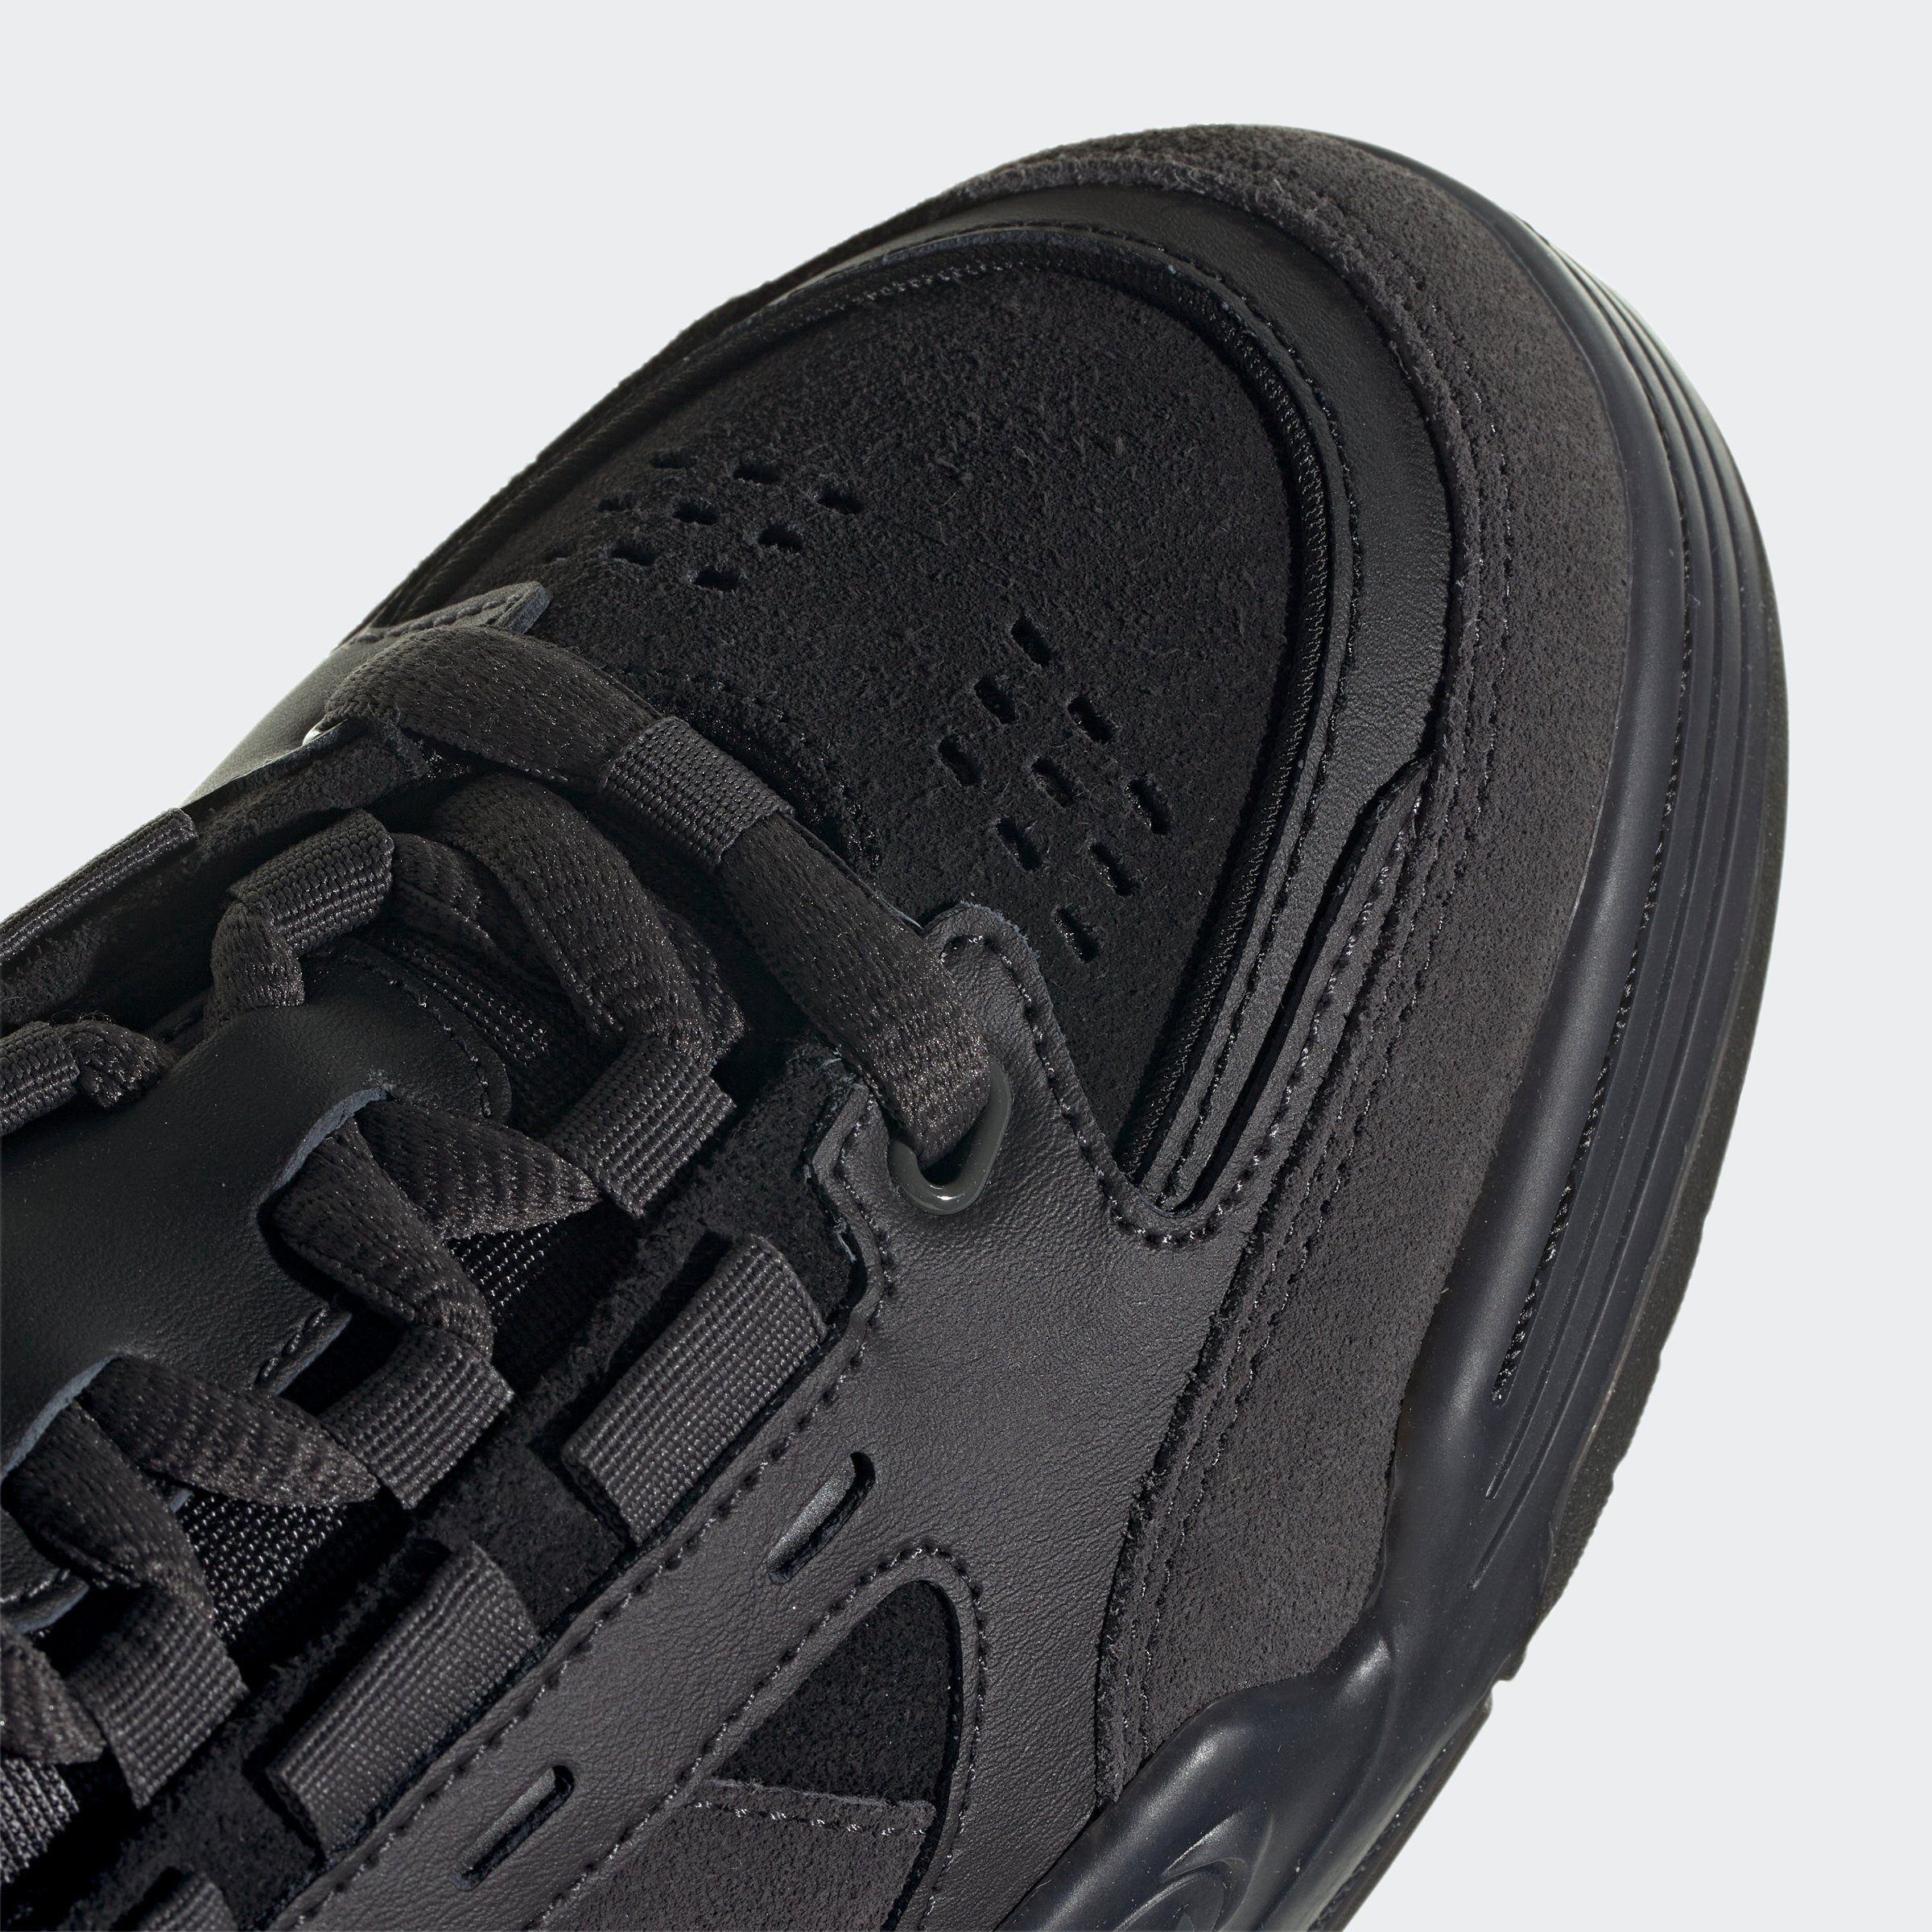 ADI2000 Core / Utility Black Black Utility adidas Black / Originals Sneaker